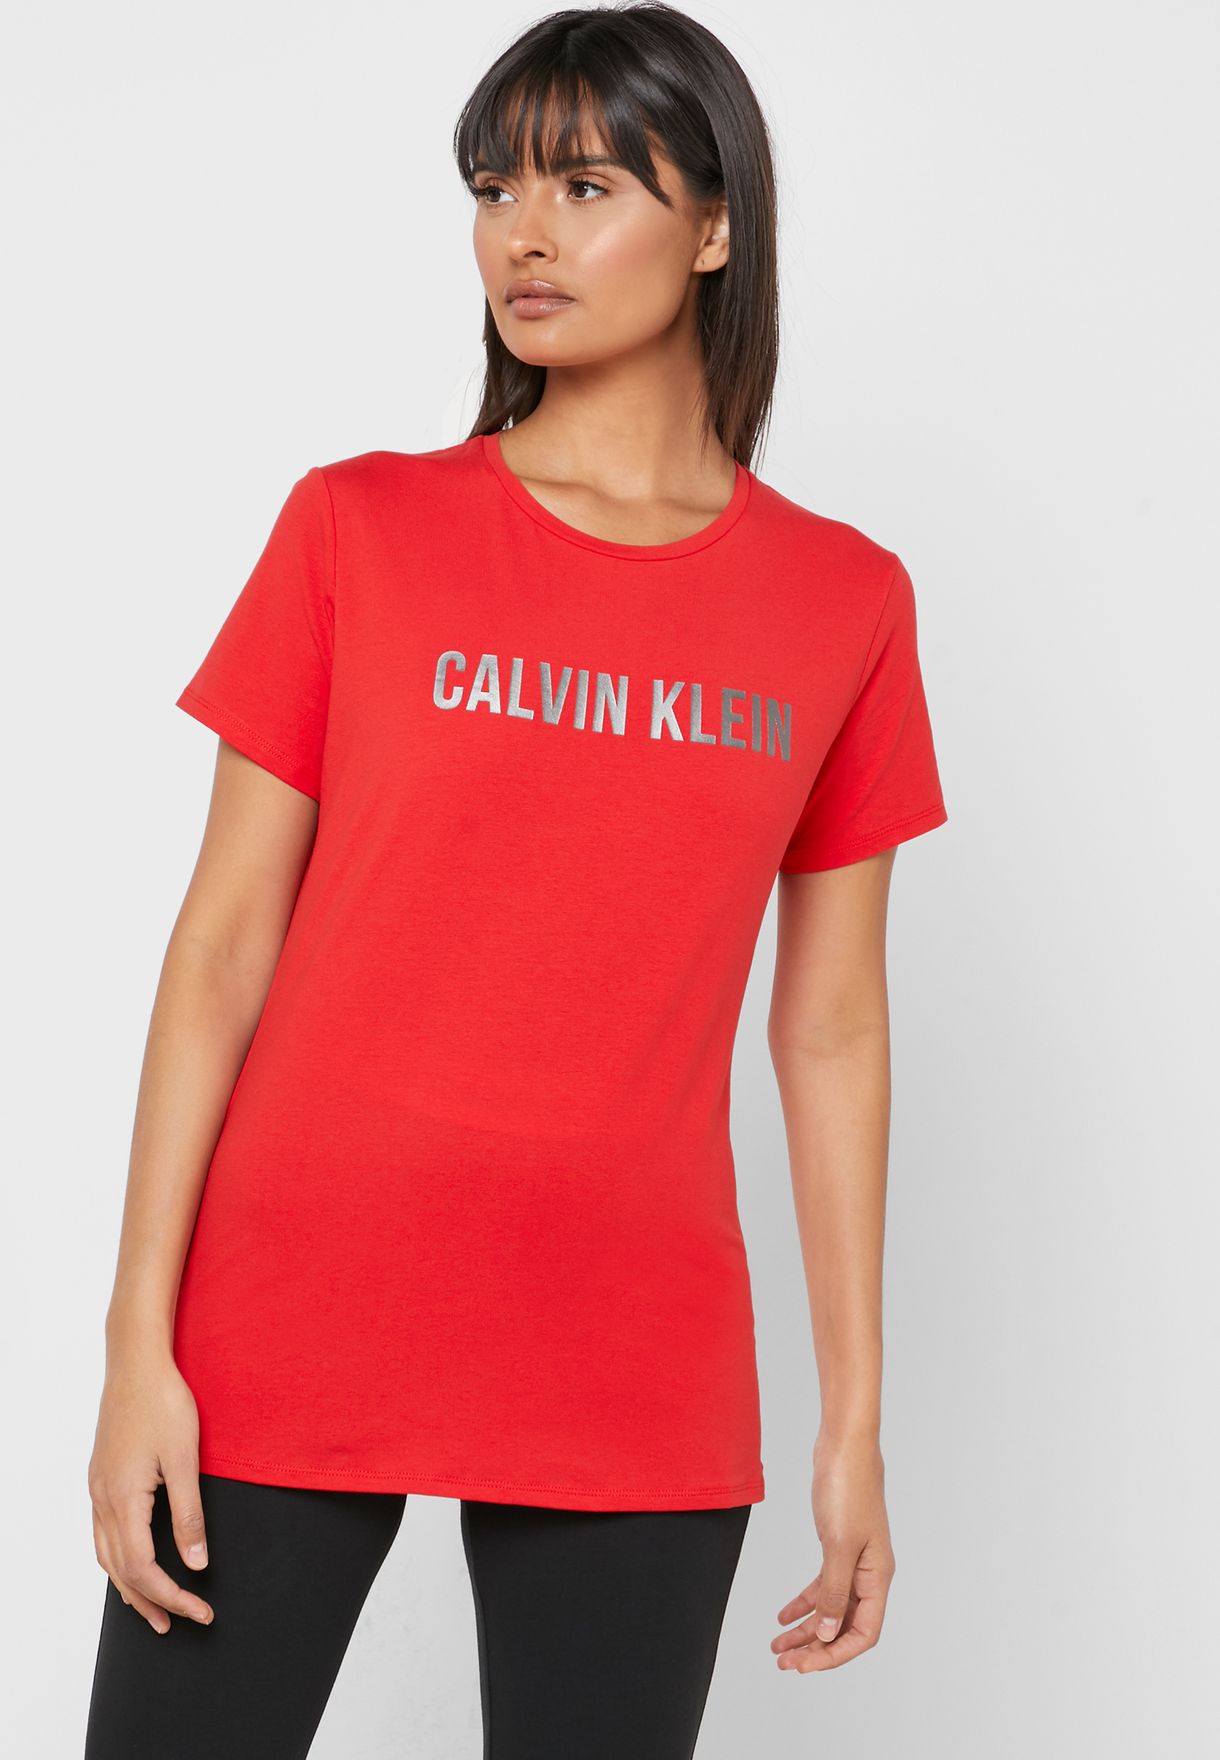 womens red calvin klein t shirt